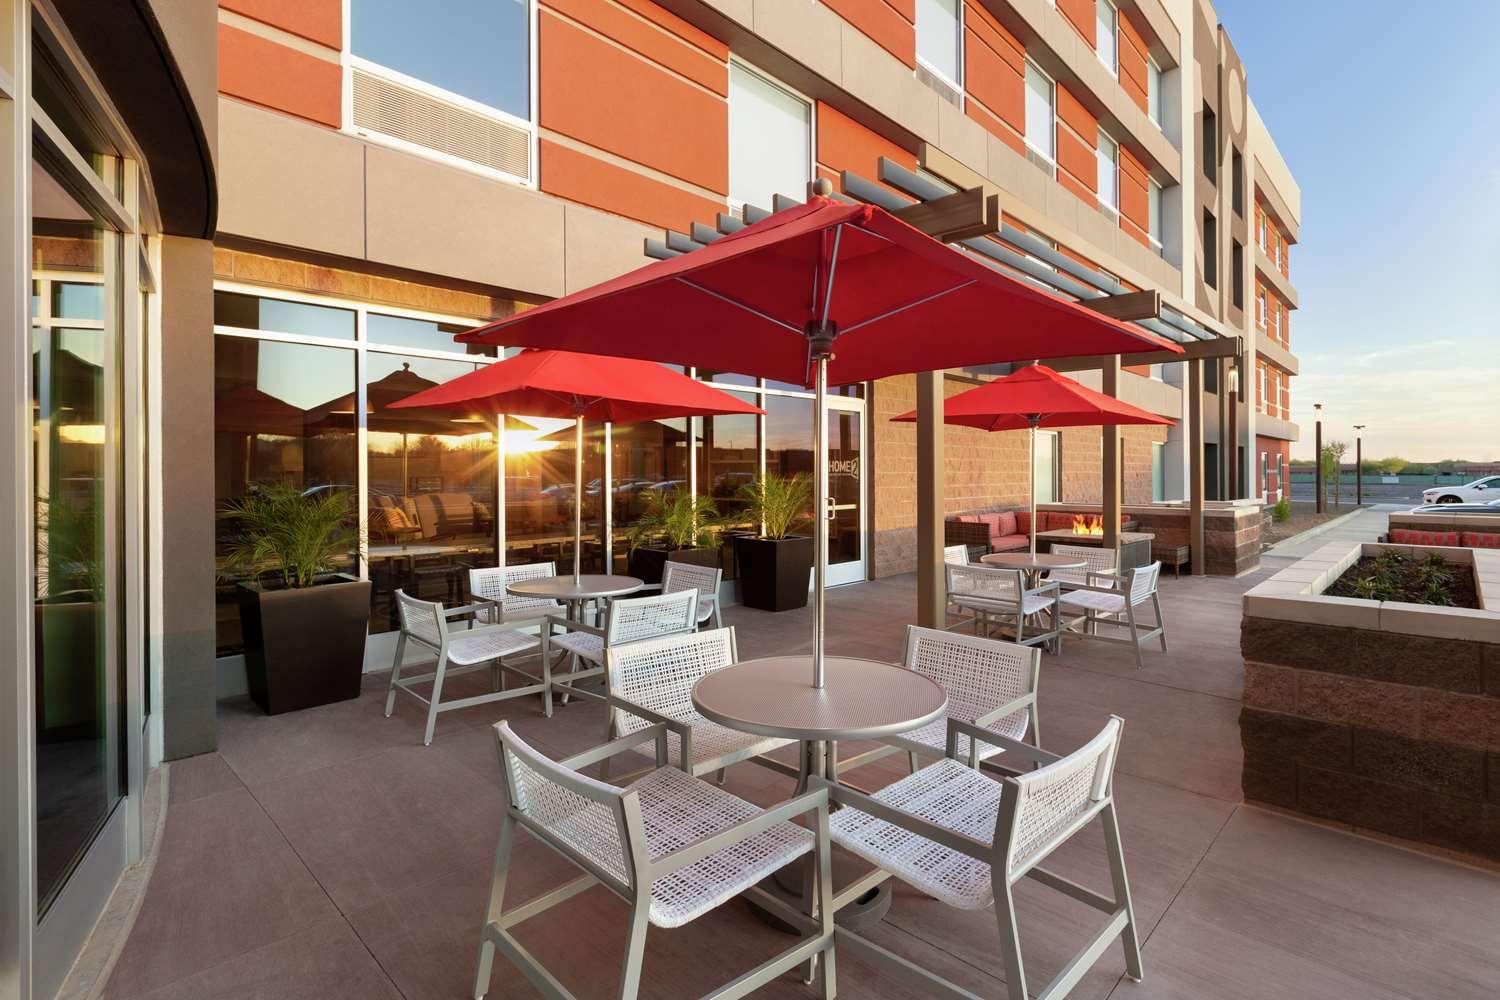 Home2 Suites by Hilton Scottsdale Salt River in Scottsdale, AZ